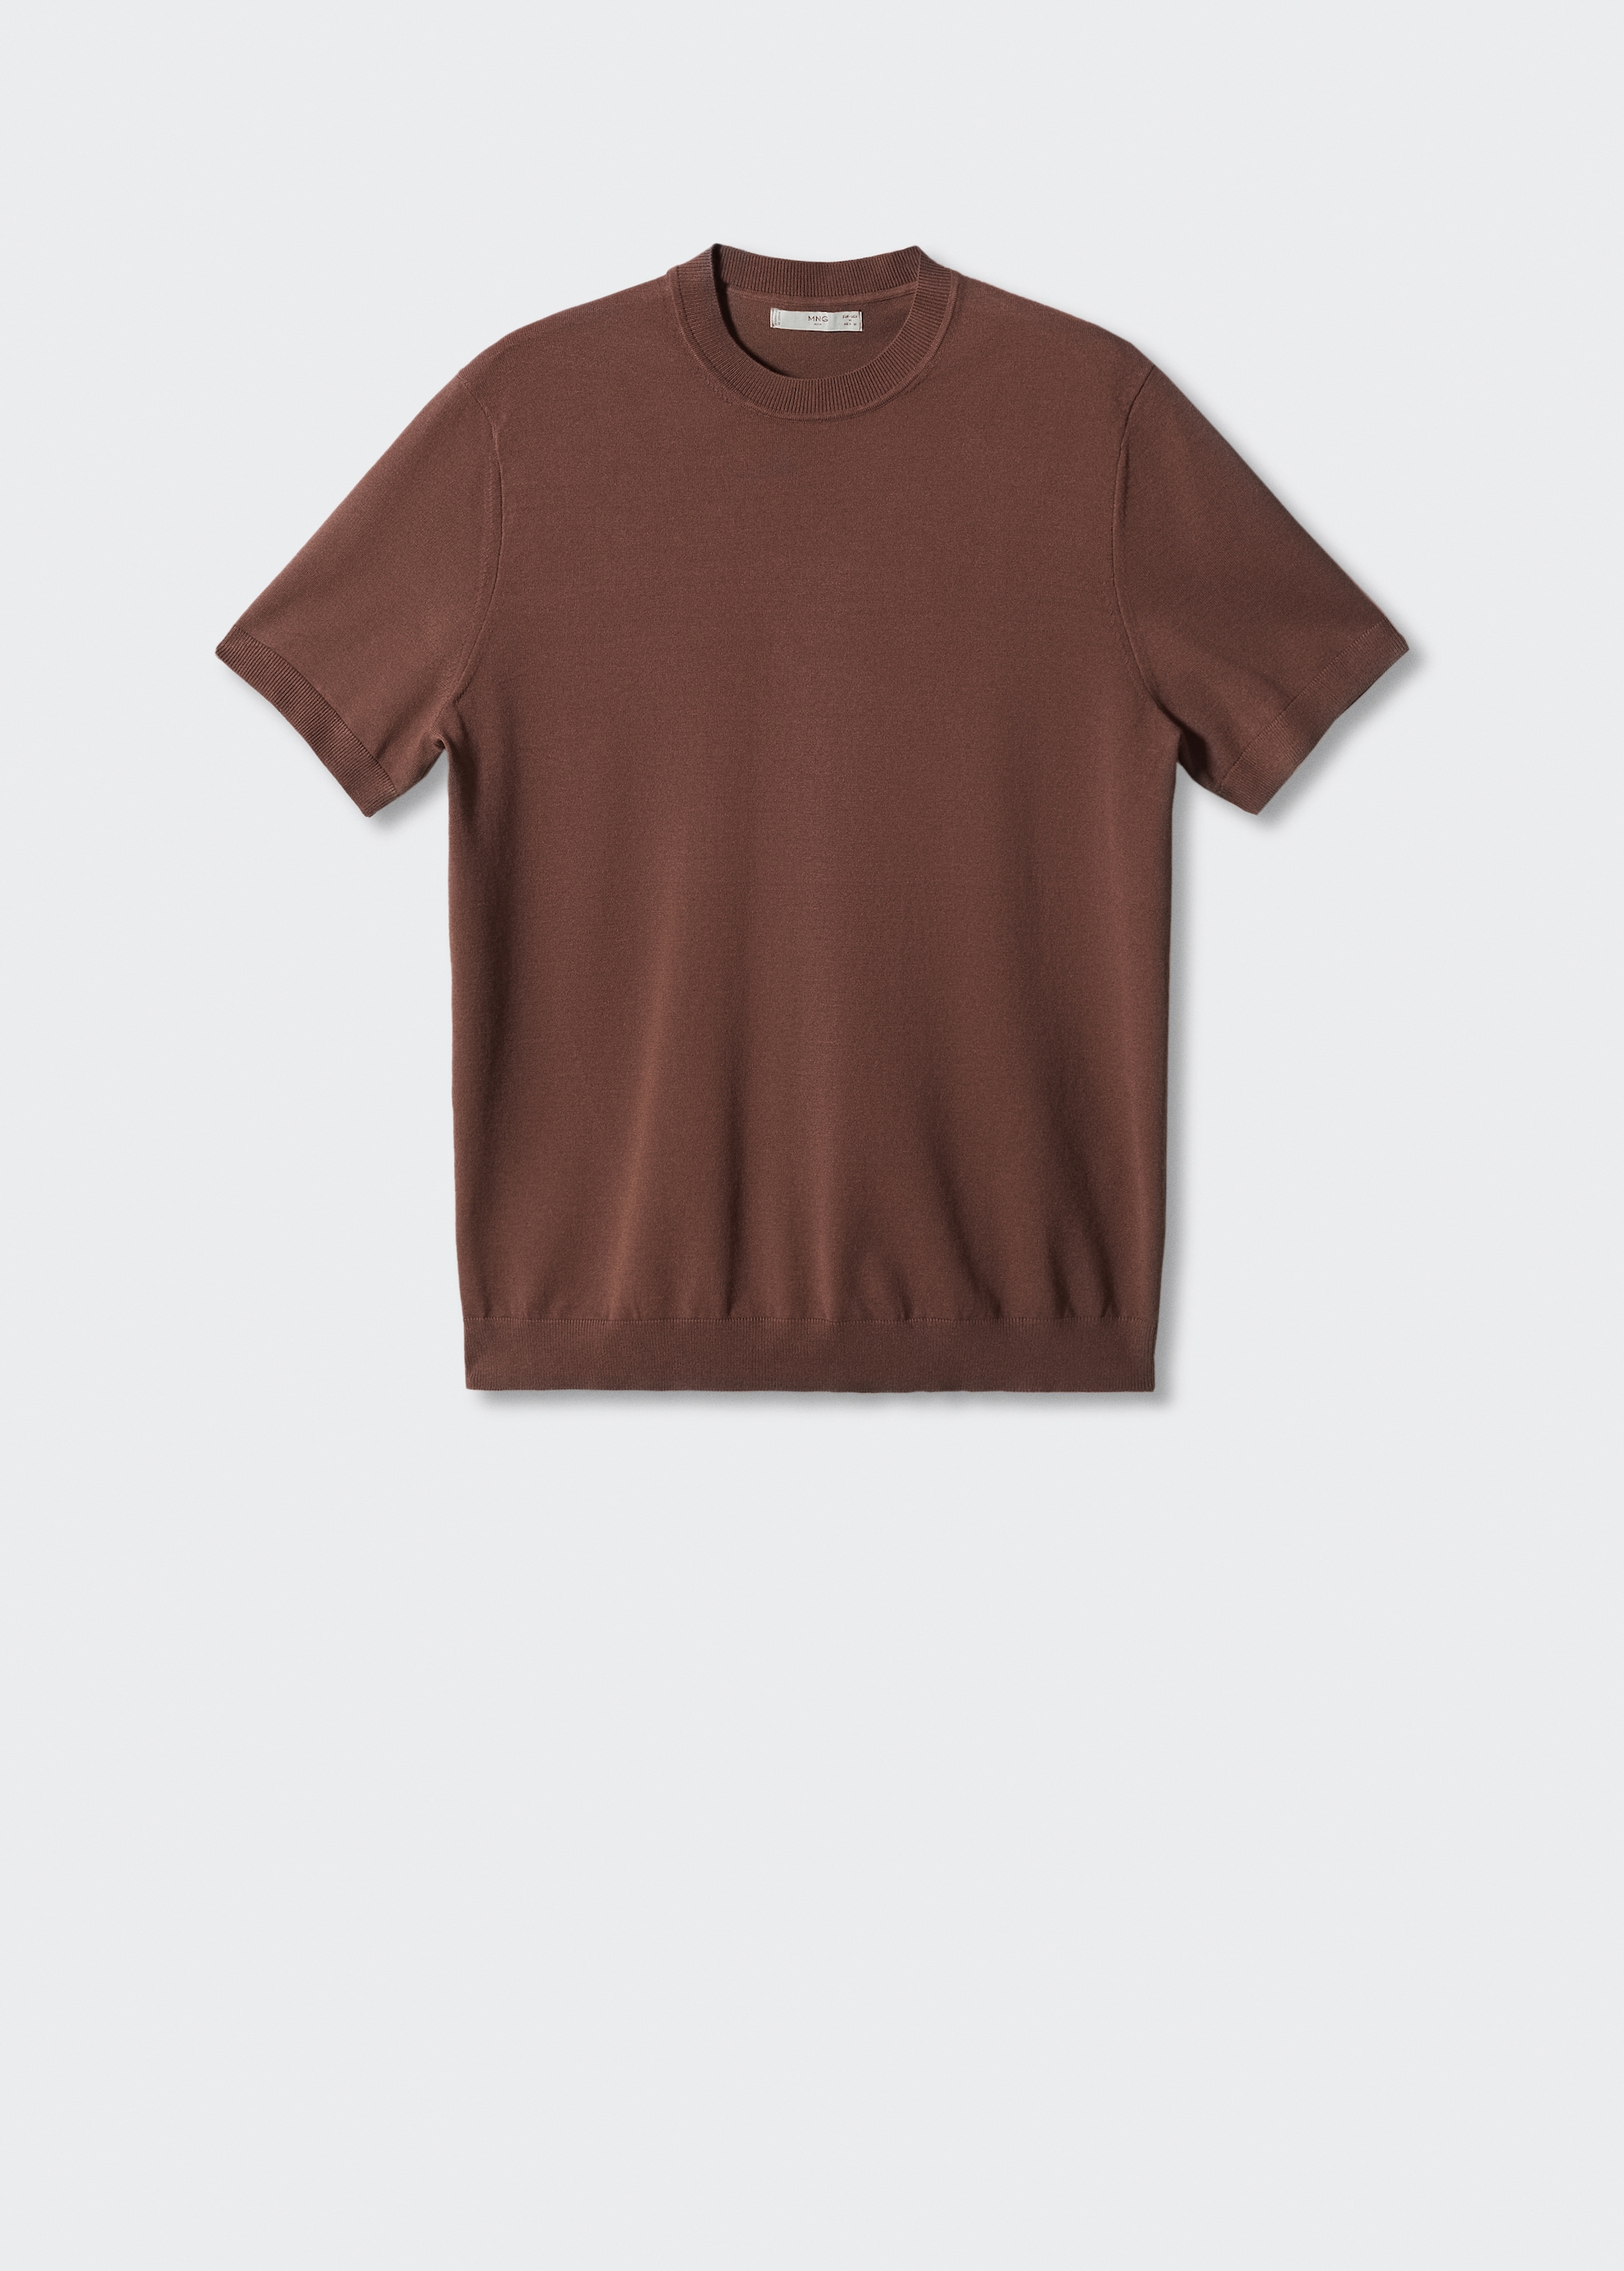 Camiseta punto fino - Artículo sin modelo